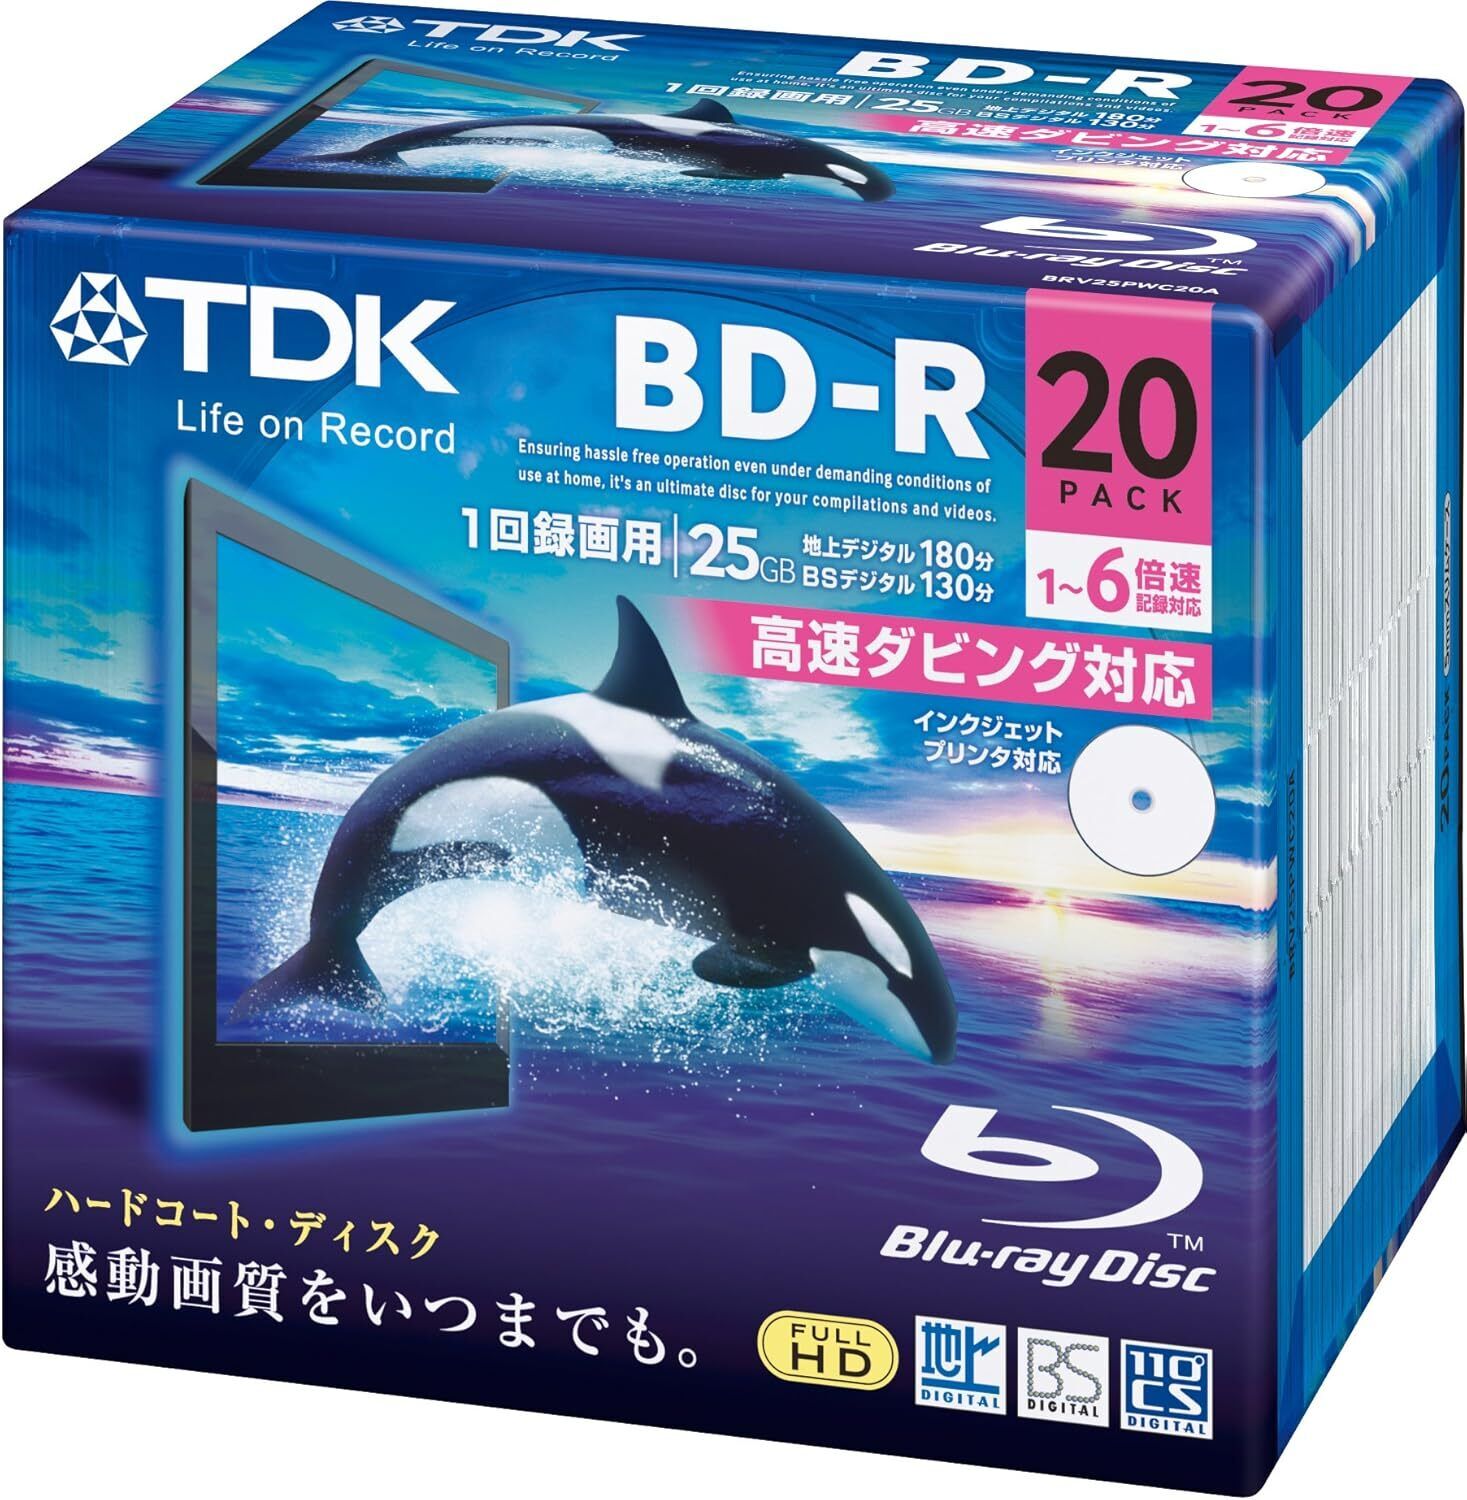 TDK Recording Blu-ray Disc BD-R 25GB 1-6x White Wide Printable 20 Pack 5mm Slim